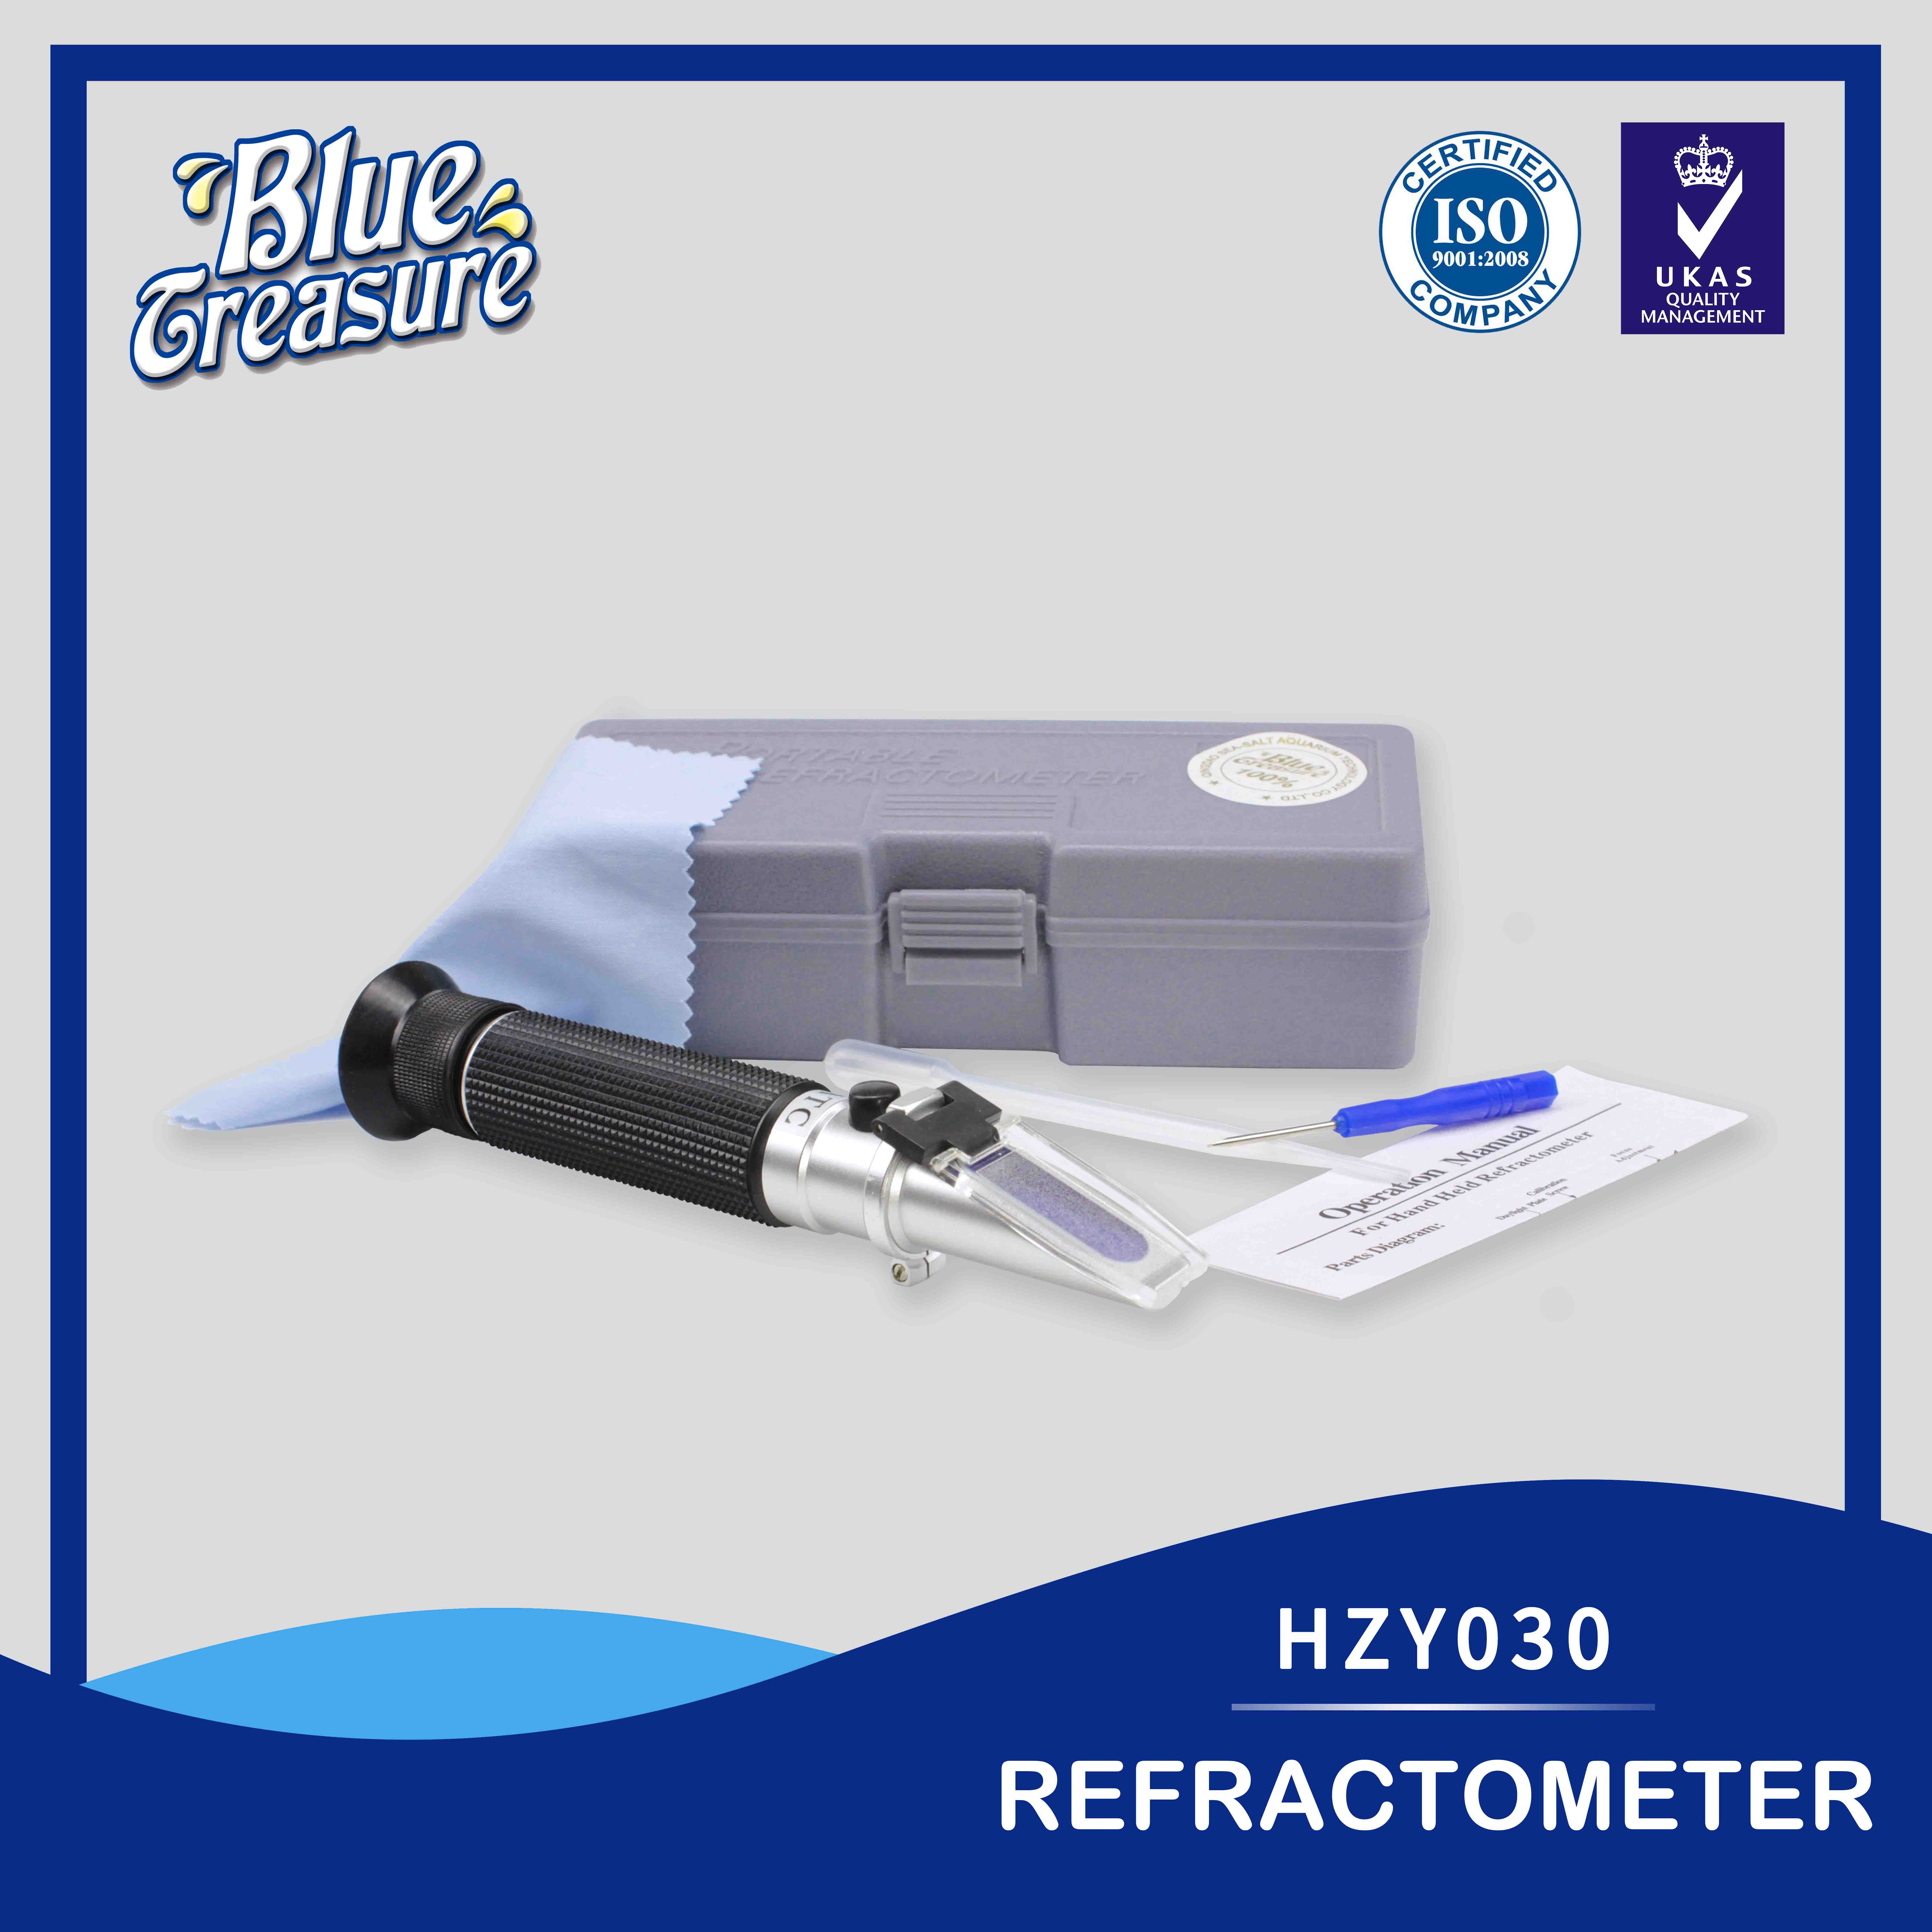 New Portable Refractometer HZY030